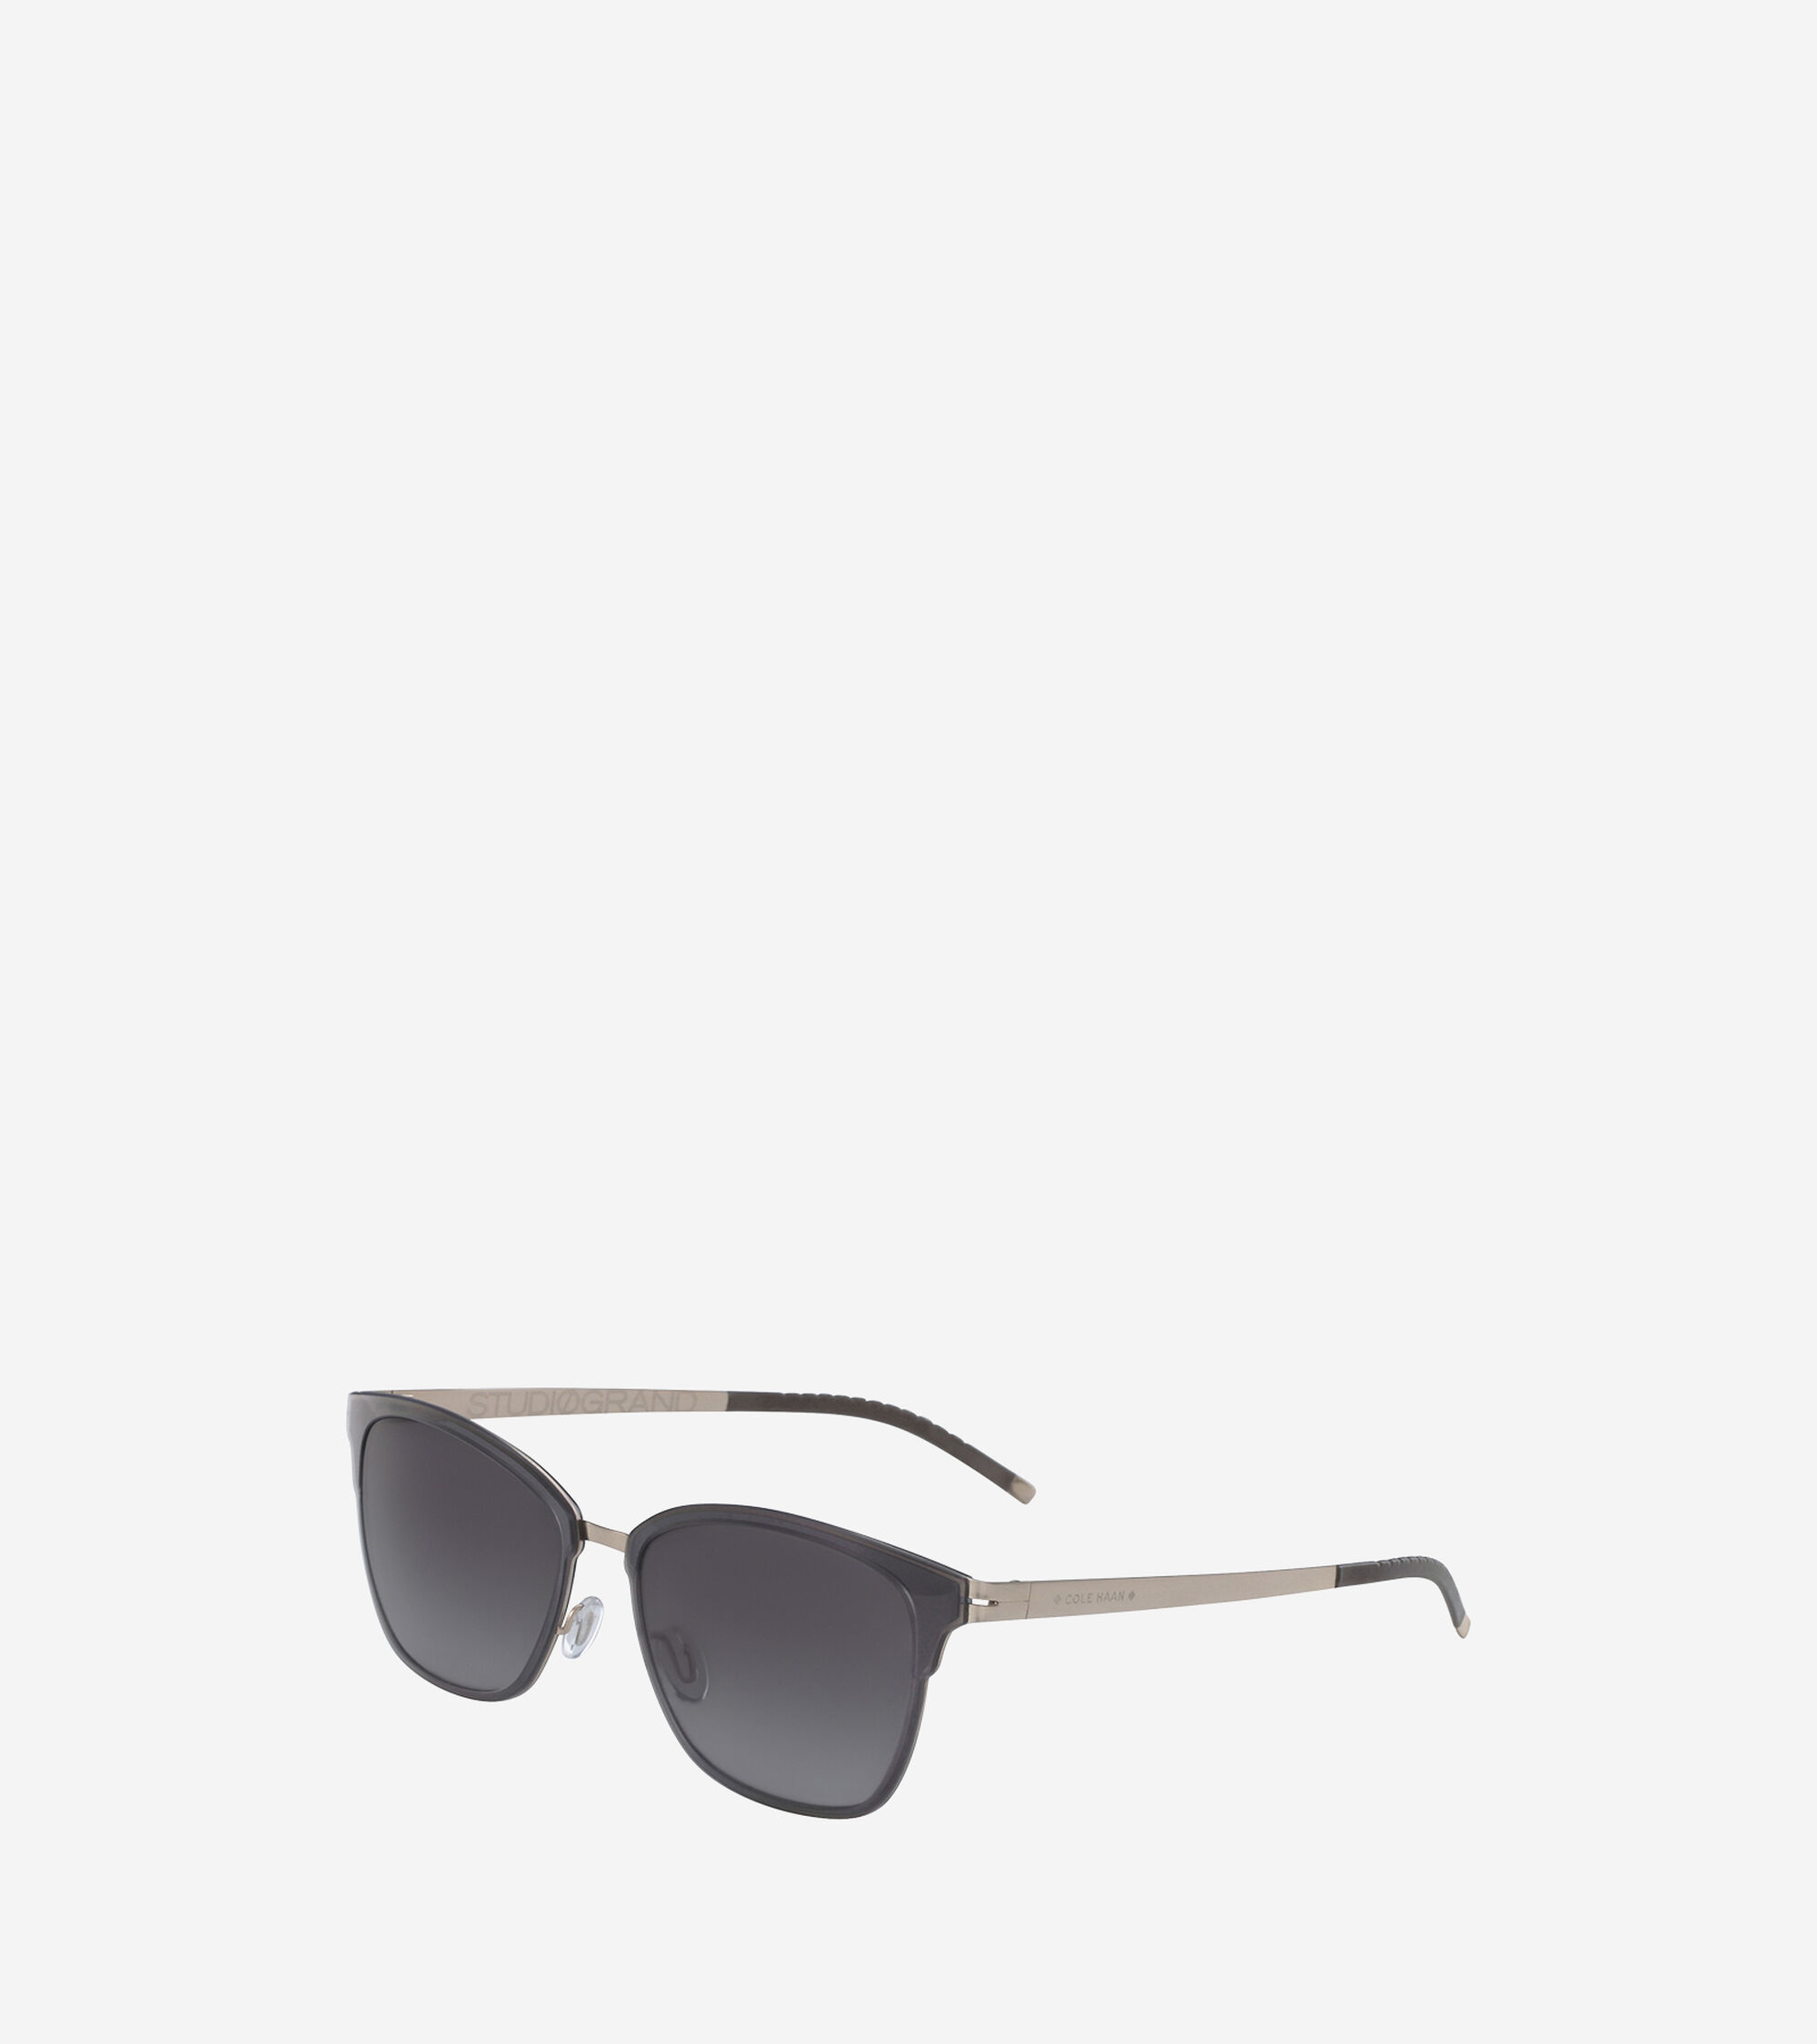 StudioGrand Rectangle Sunglasses in Smoke | Cole Haan